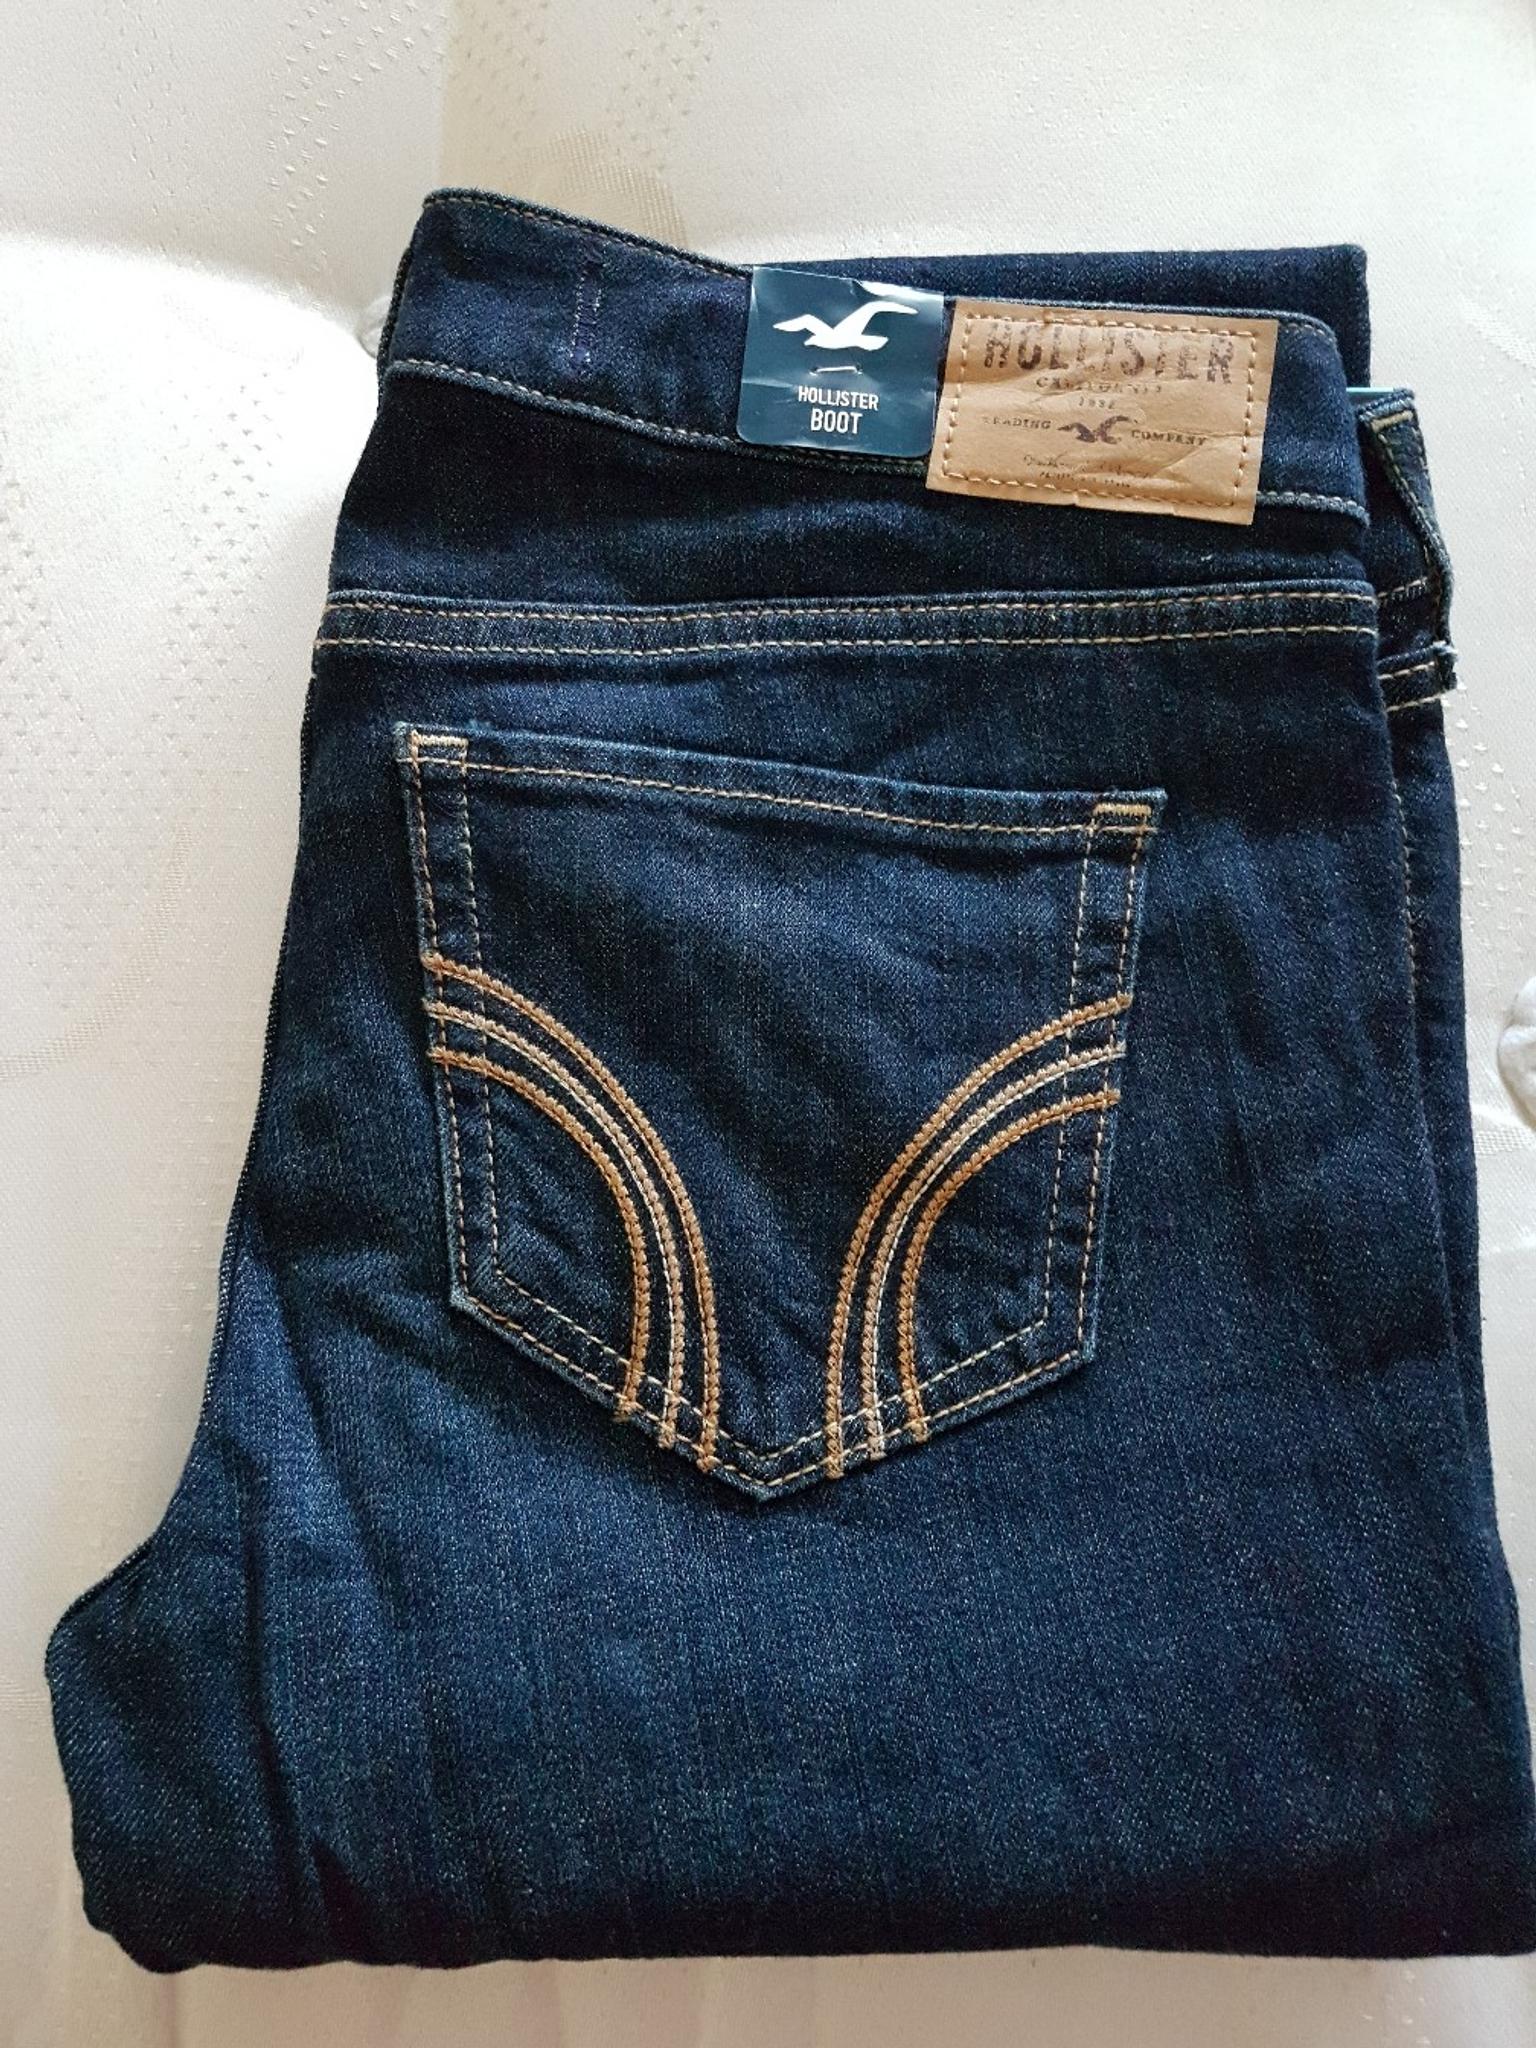 hollister jeans price